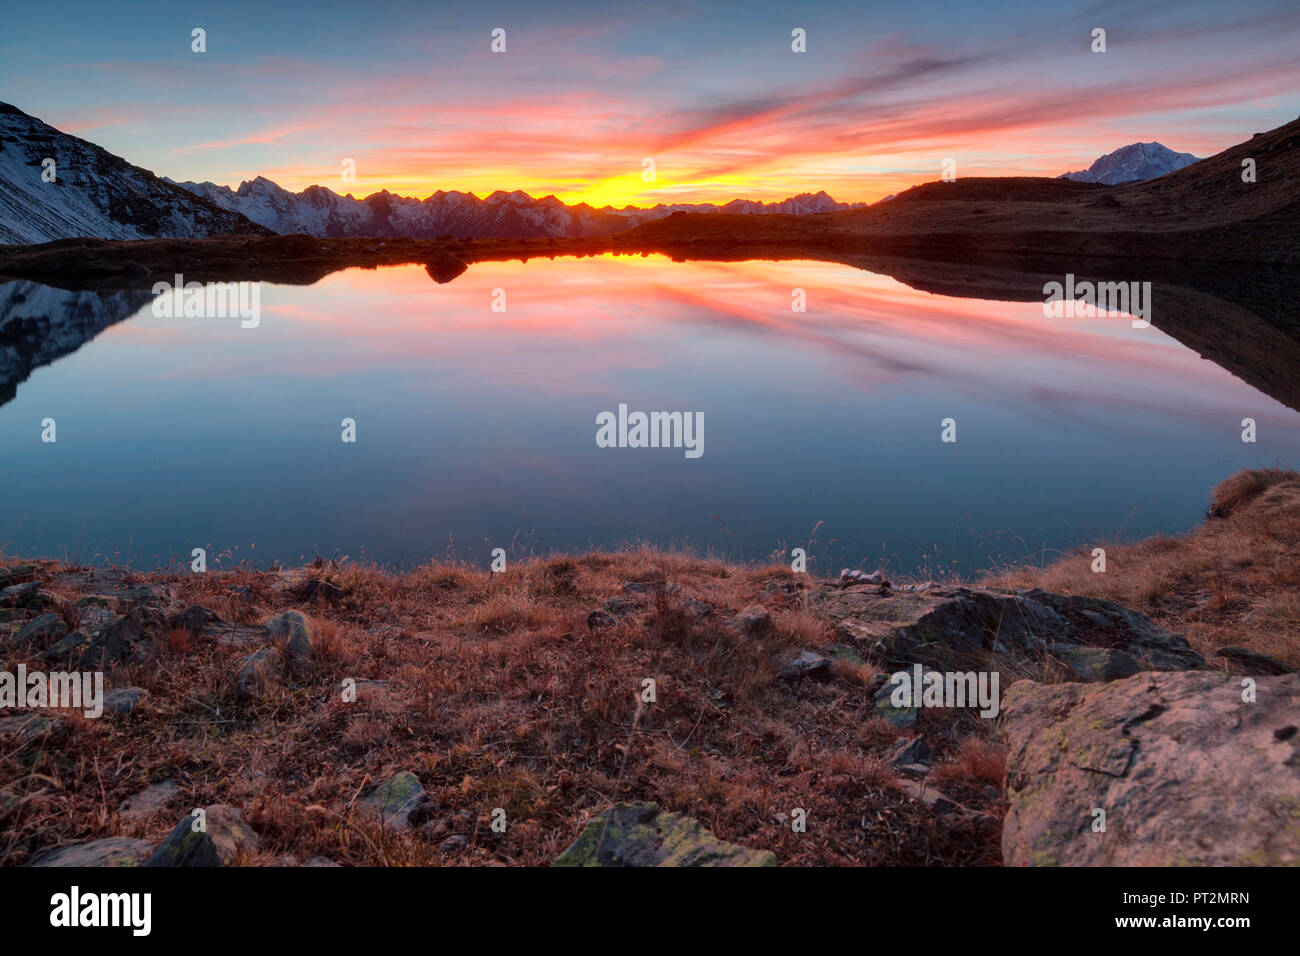 Der Sonnenuntergang am See Leysser, Saint-Nicolas, Aostatal, Italien Stockfoto